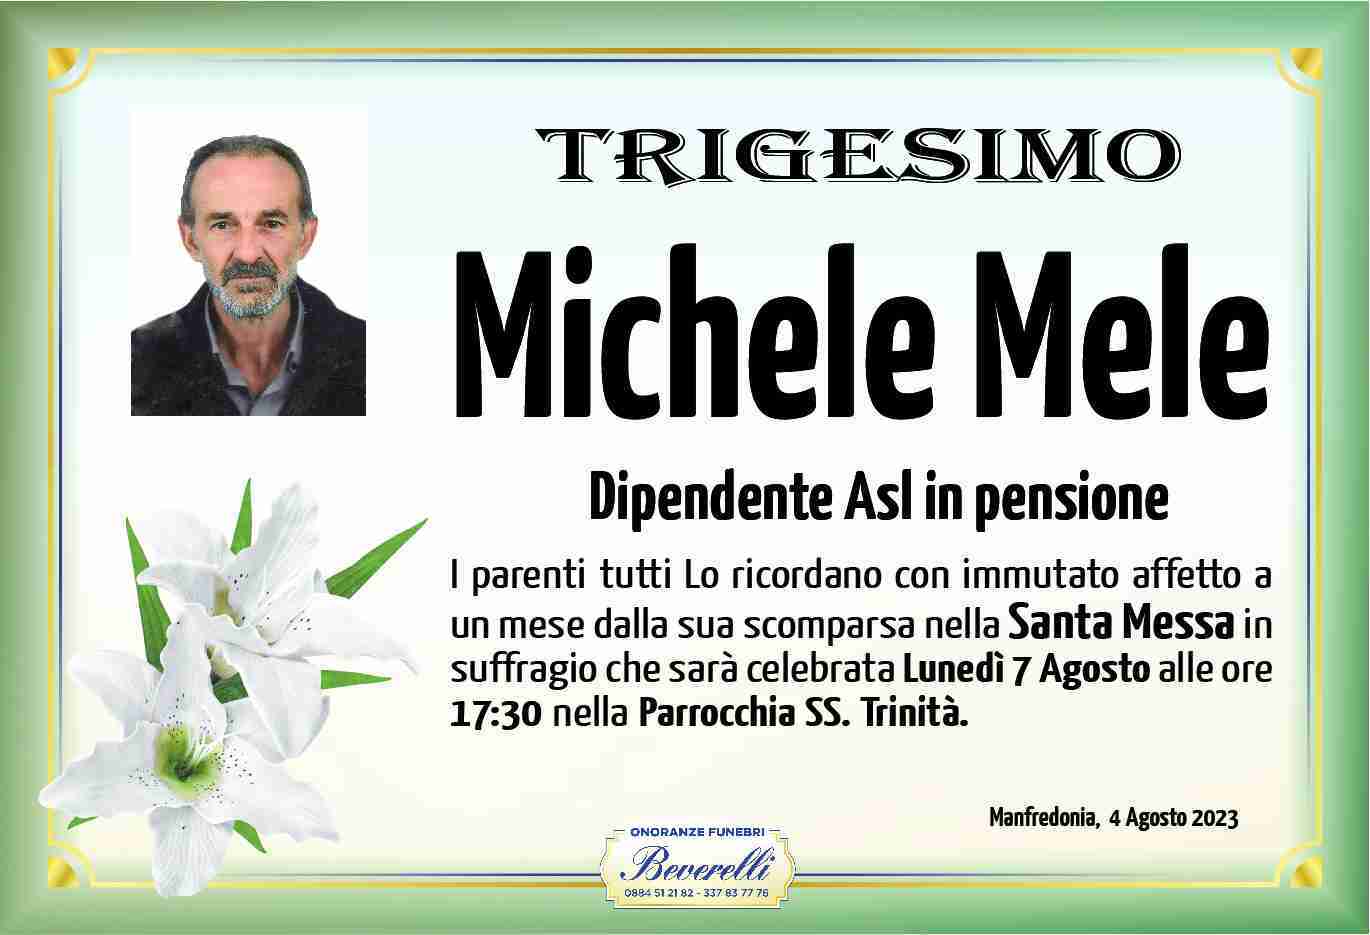 Michele Mele